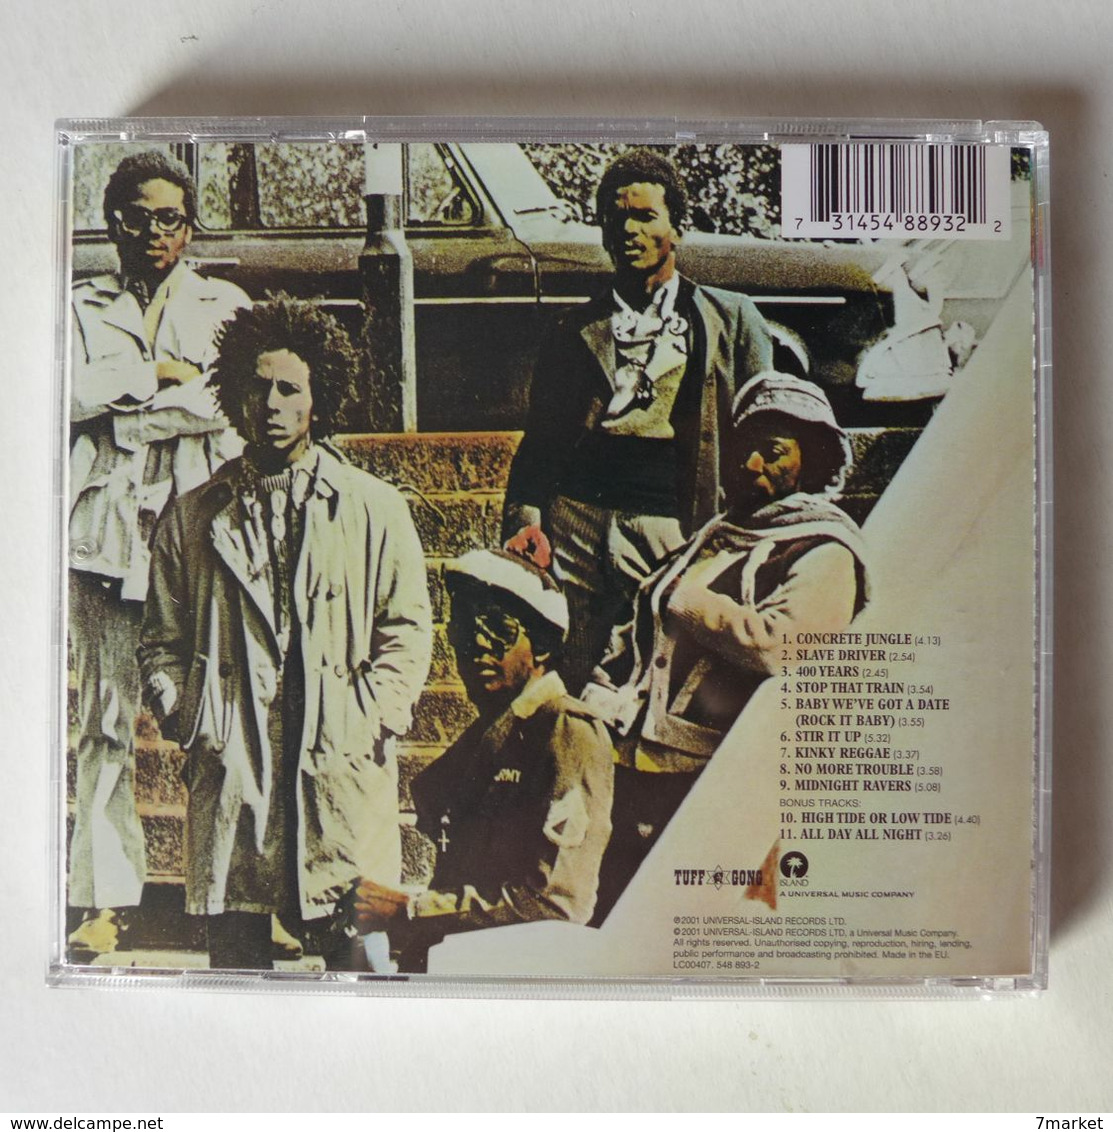 CD/ Bob Marley & The Wailers - Catch A Fire  / TBE - Reggae